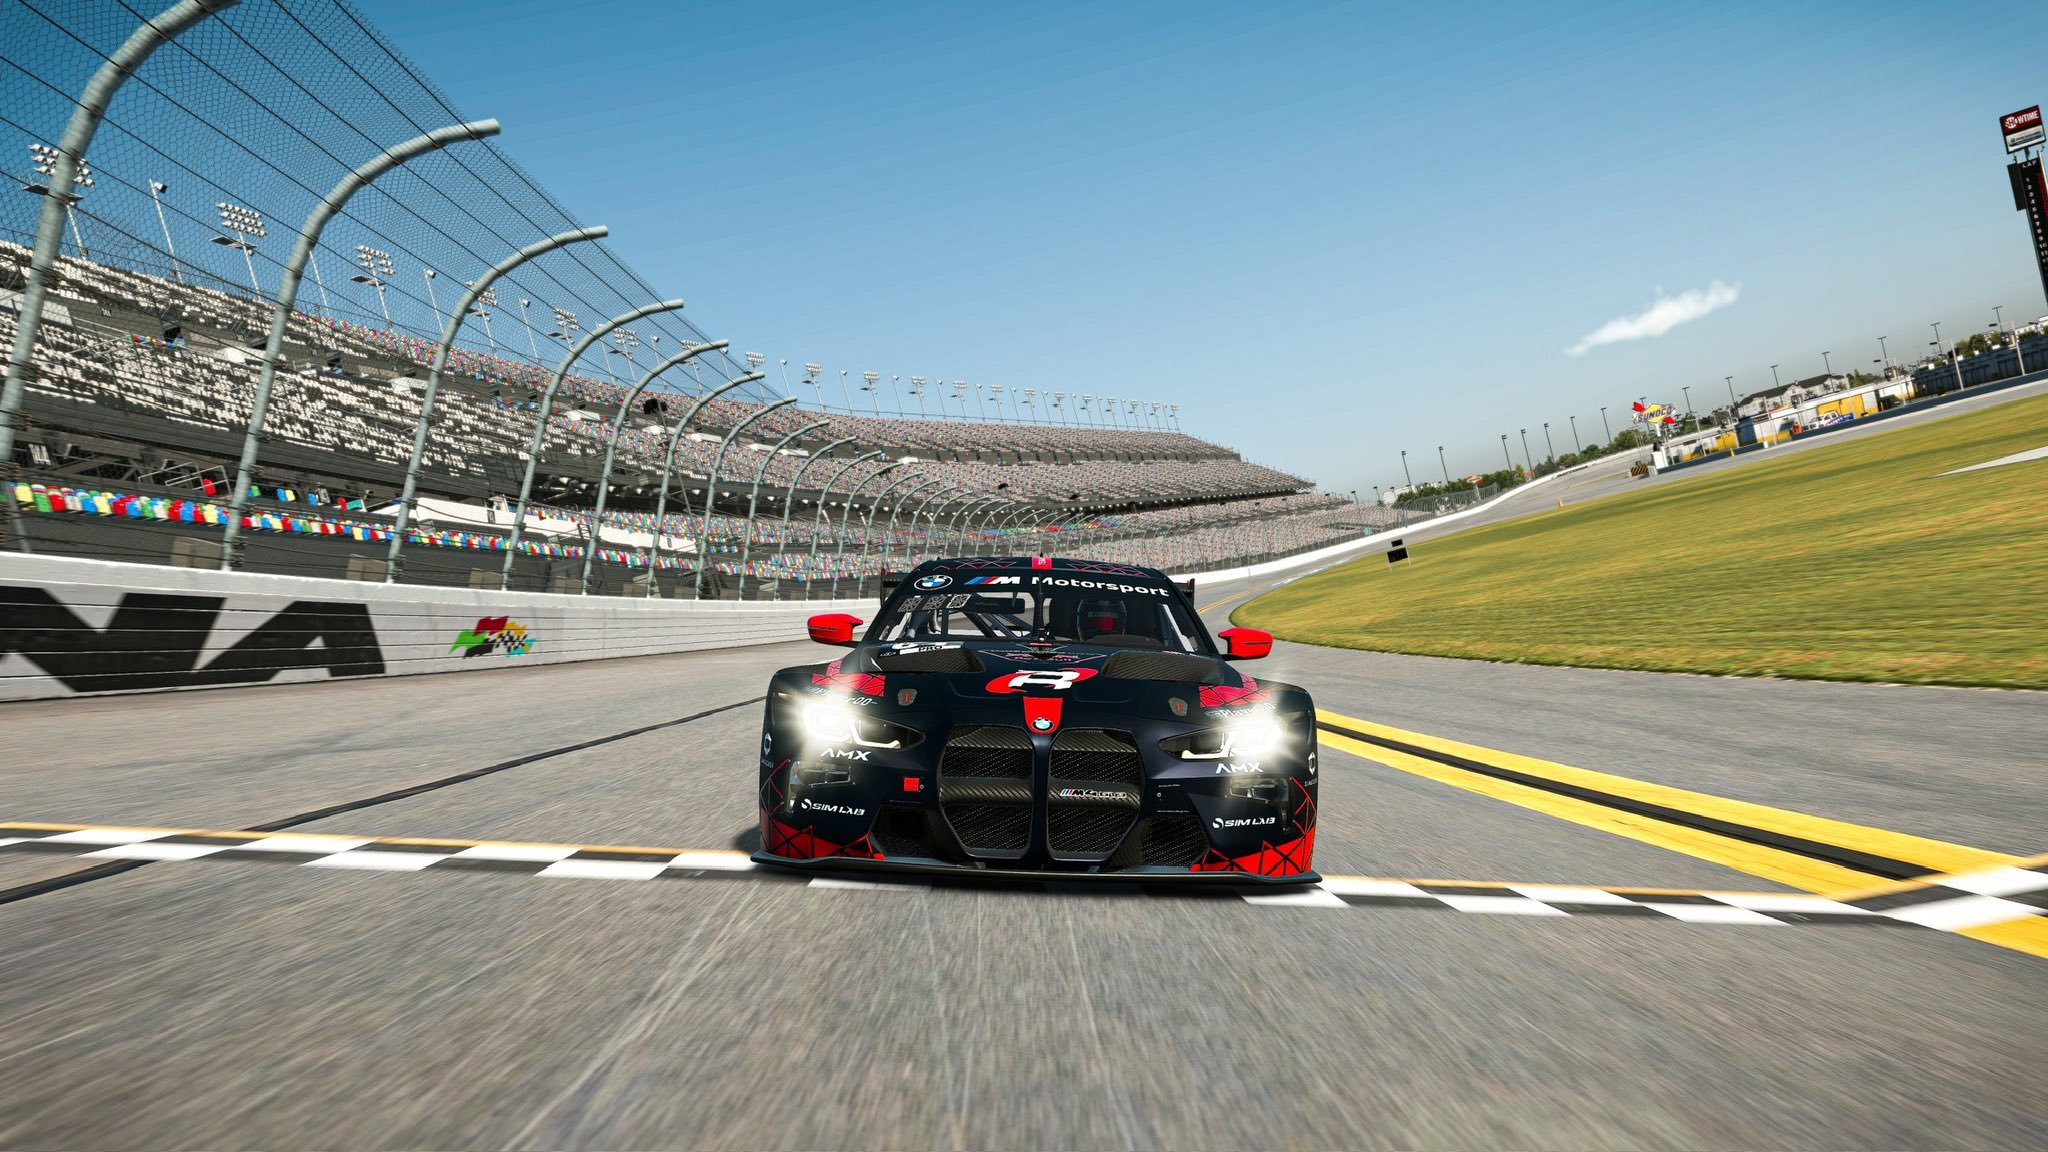 More information about "Real Racers Never Quit: ritornano le sfide online al simulatore con Max Verstappen"